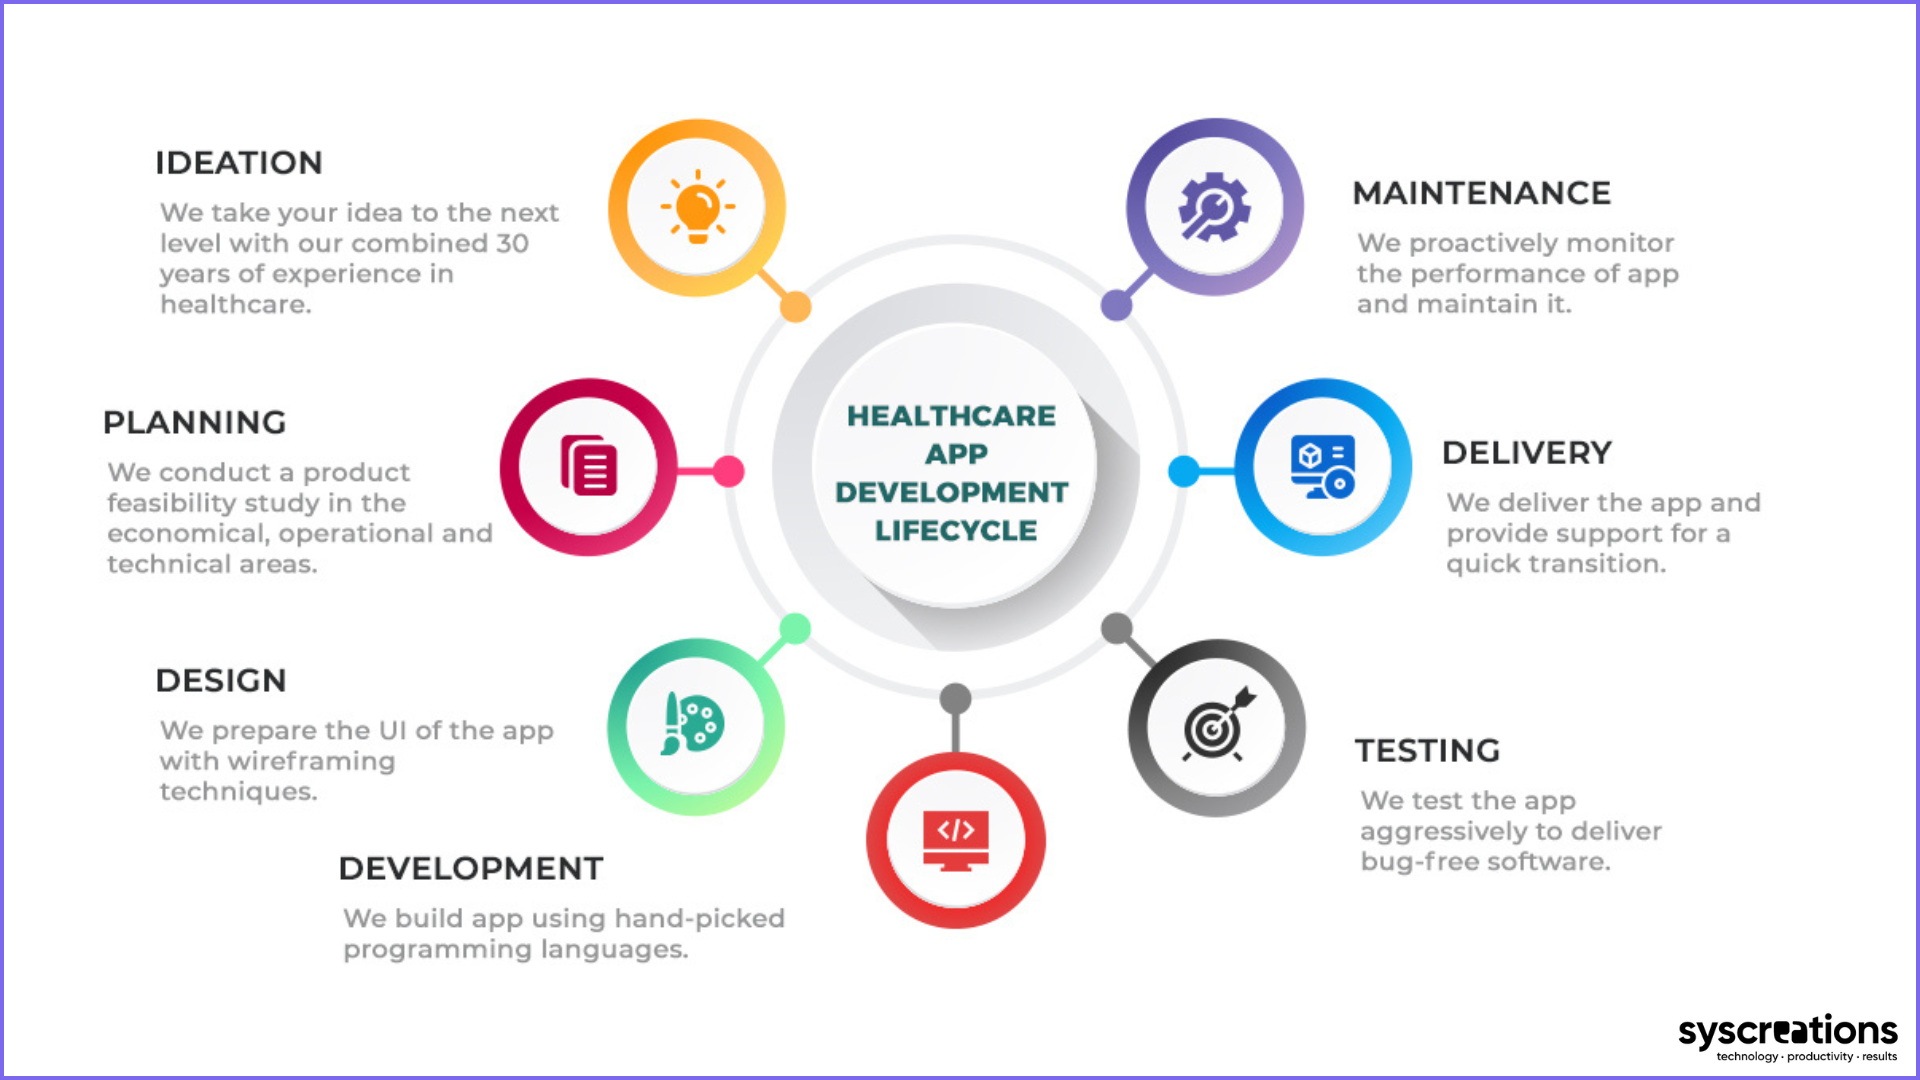 Our healthcare app development approach